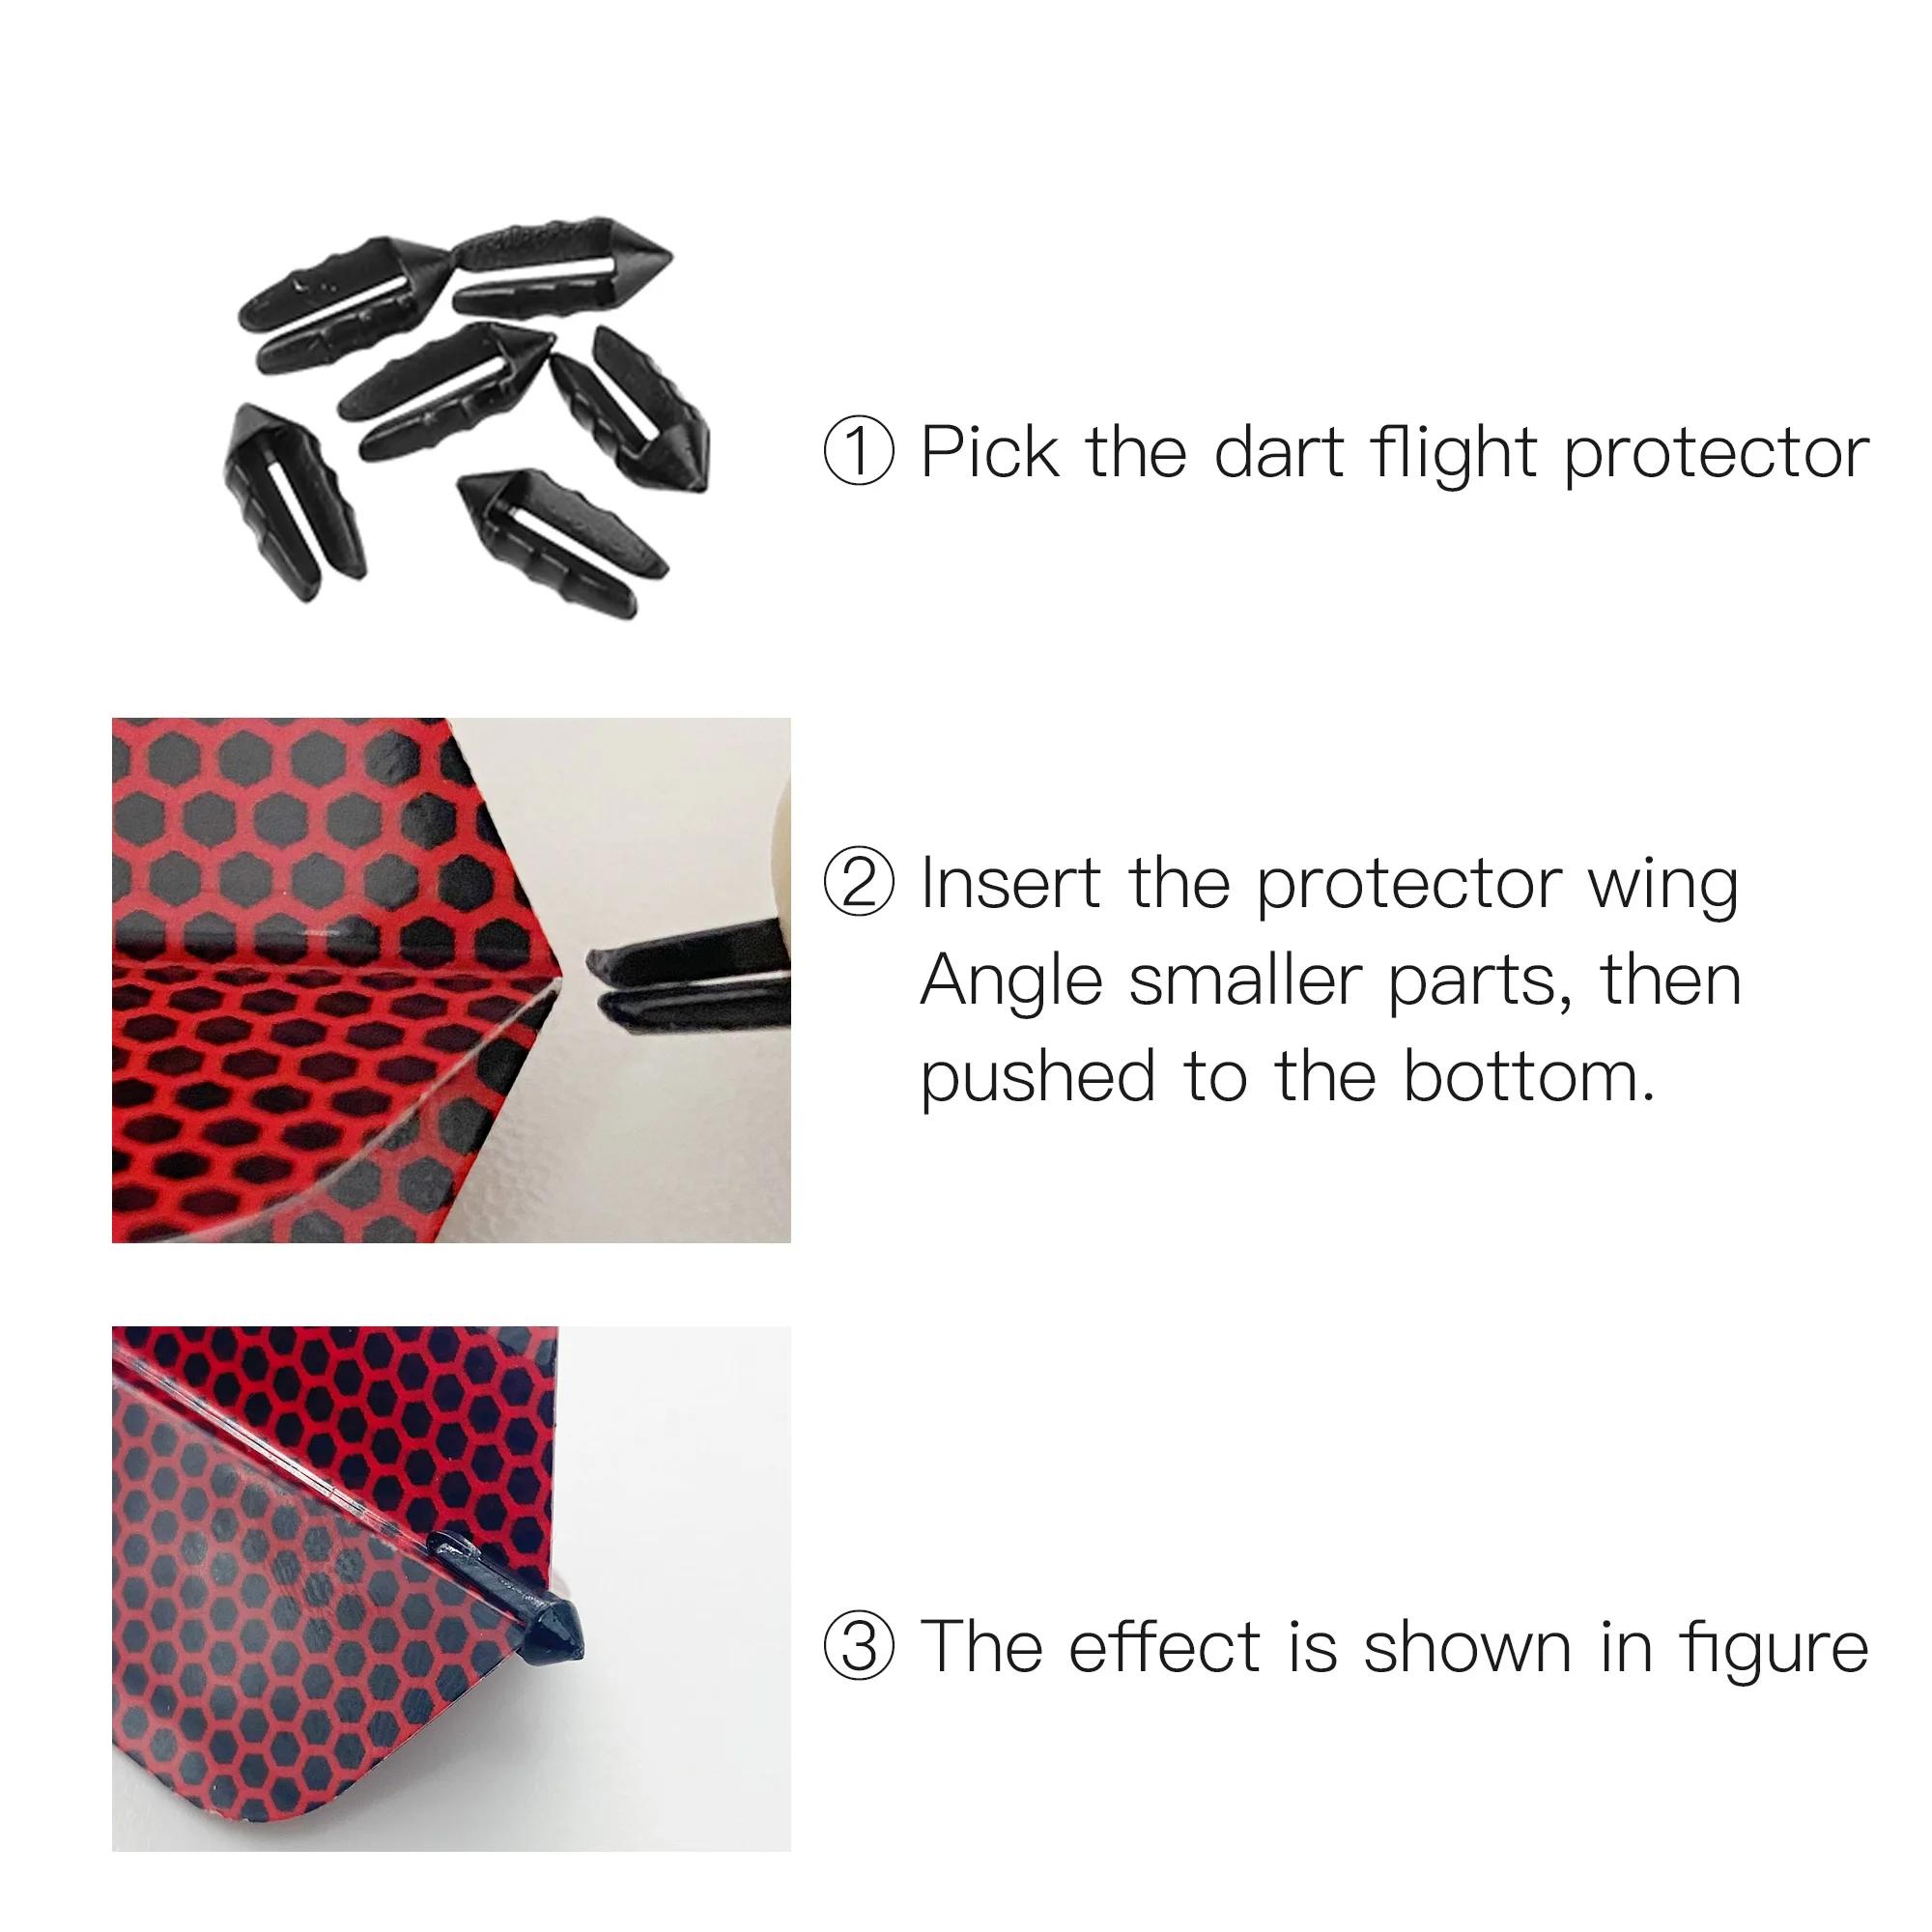 Details about   1 pcs Dart Wing Protector Dartboard Darts Flights Saver Accessories Sports L9D6 